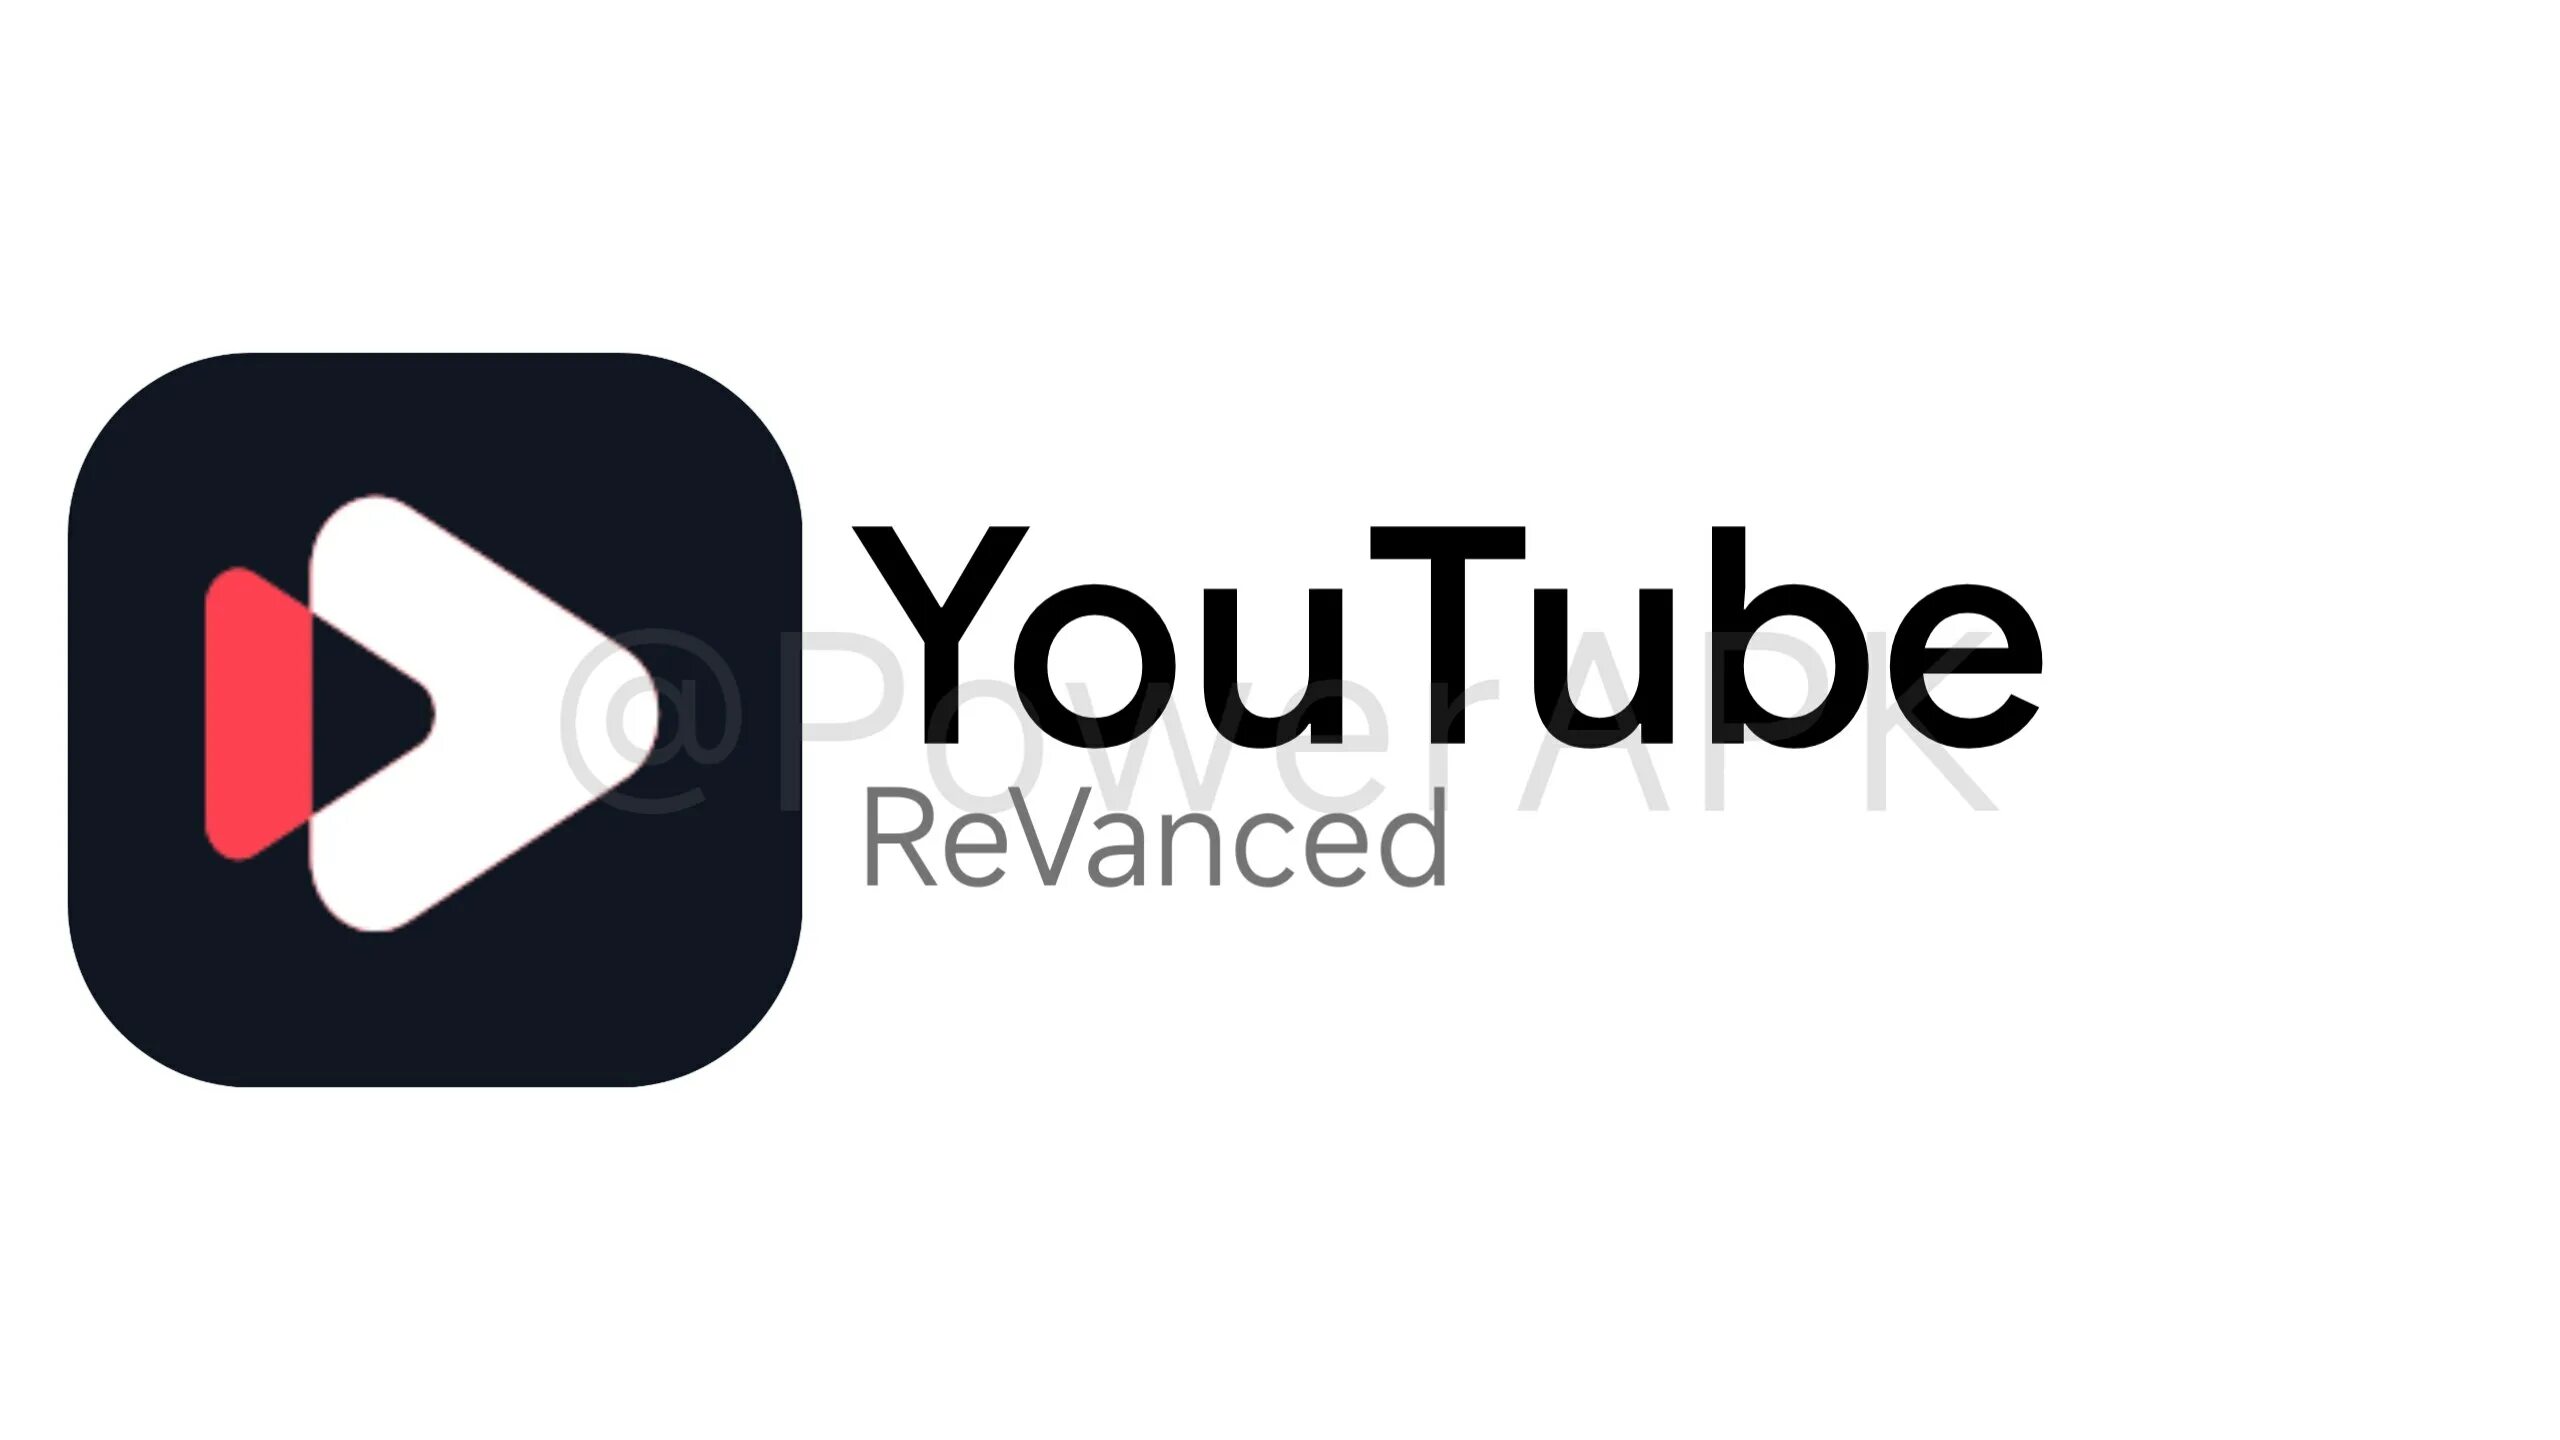 Ютуб вансед на русском. Ютуб revanced. Youtube revanced logo. Youtube Music revanced. Revanced для Windows.